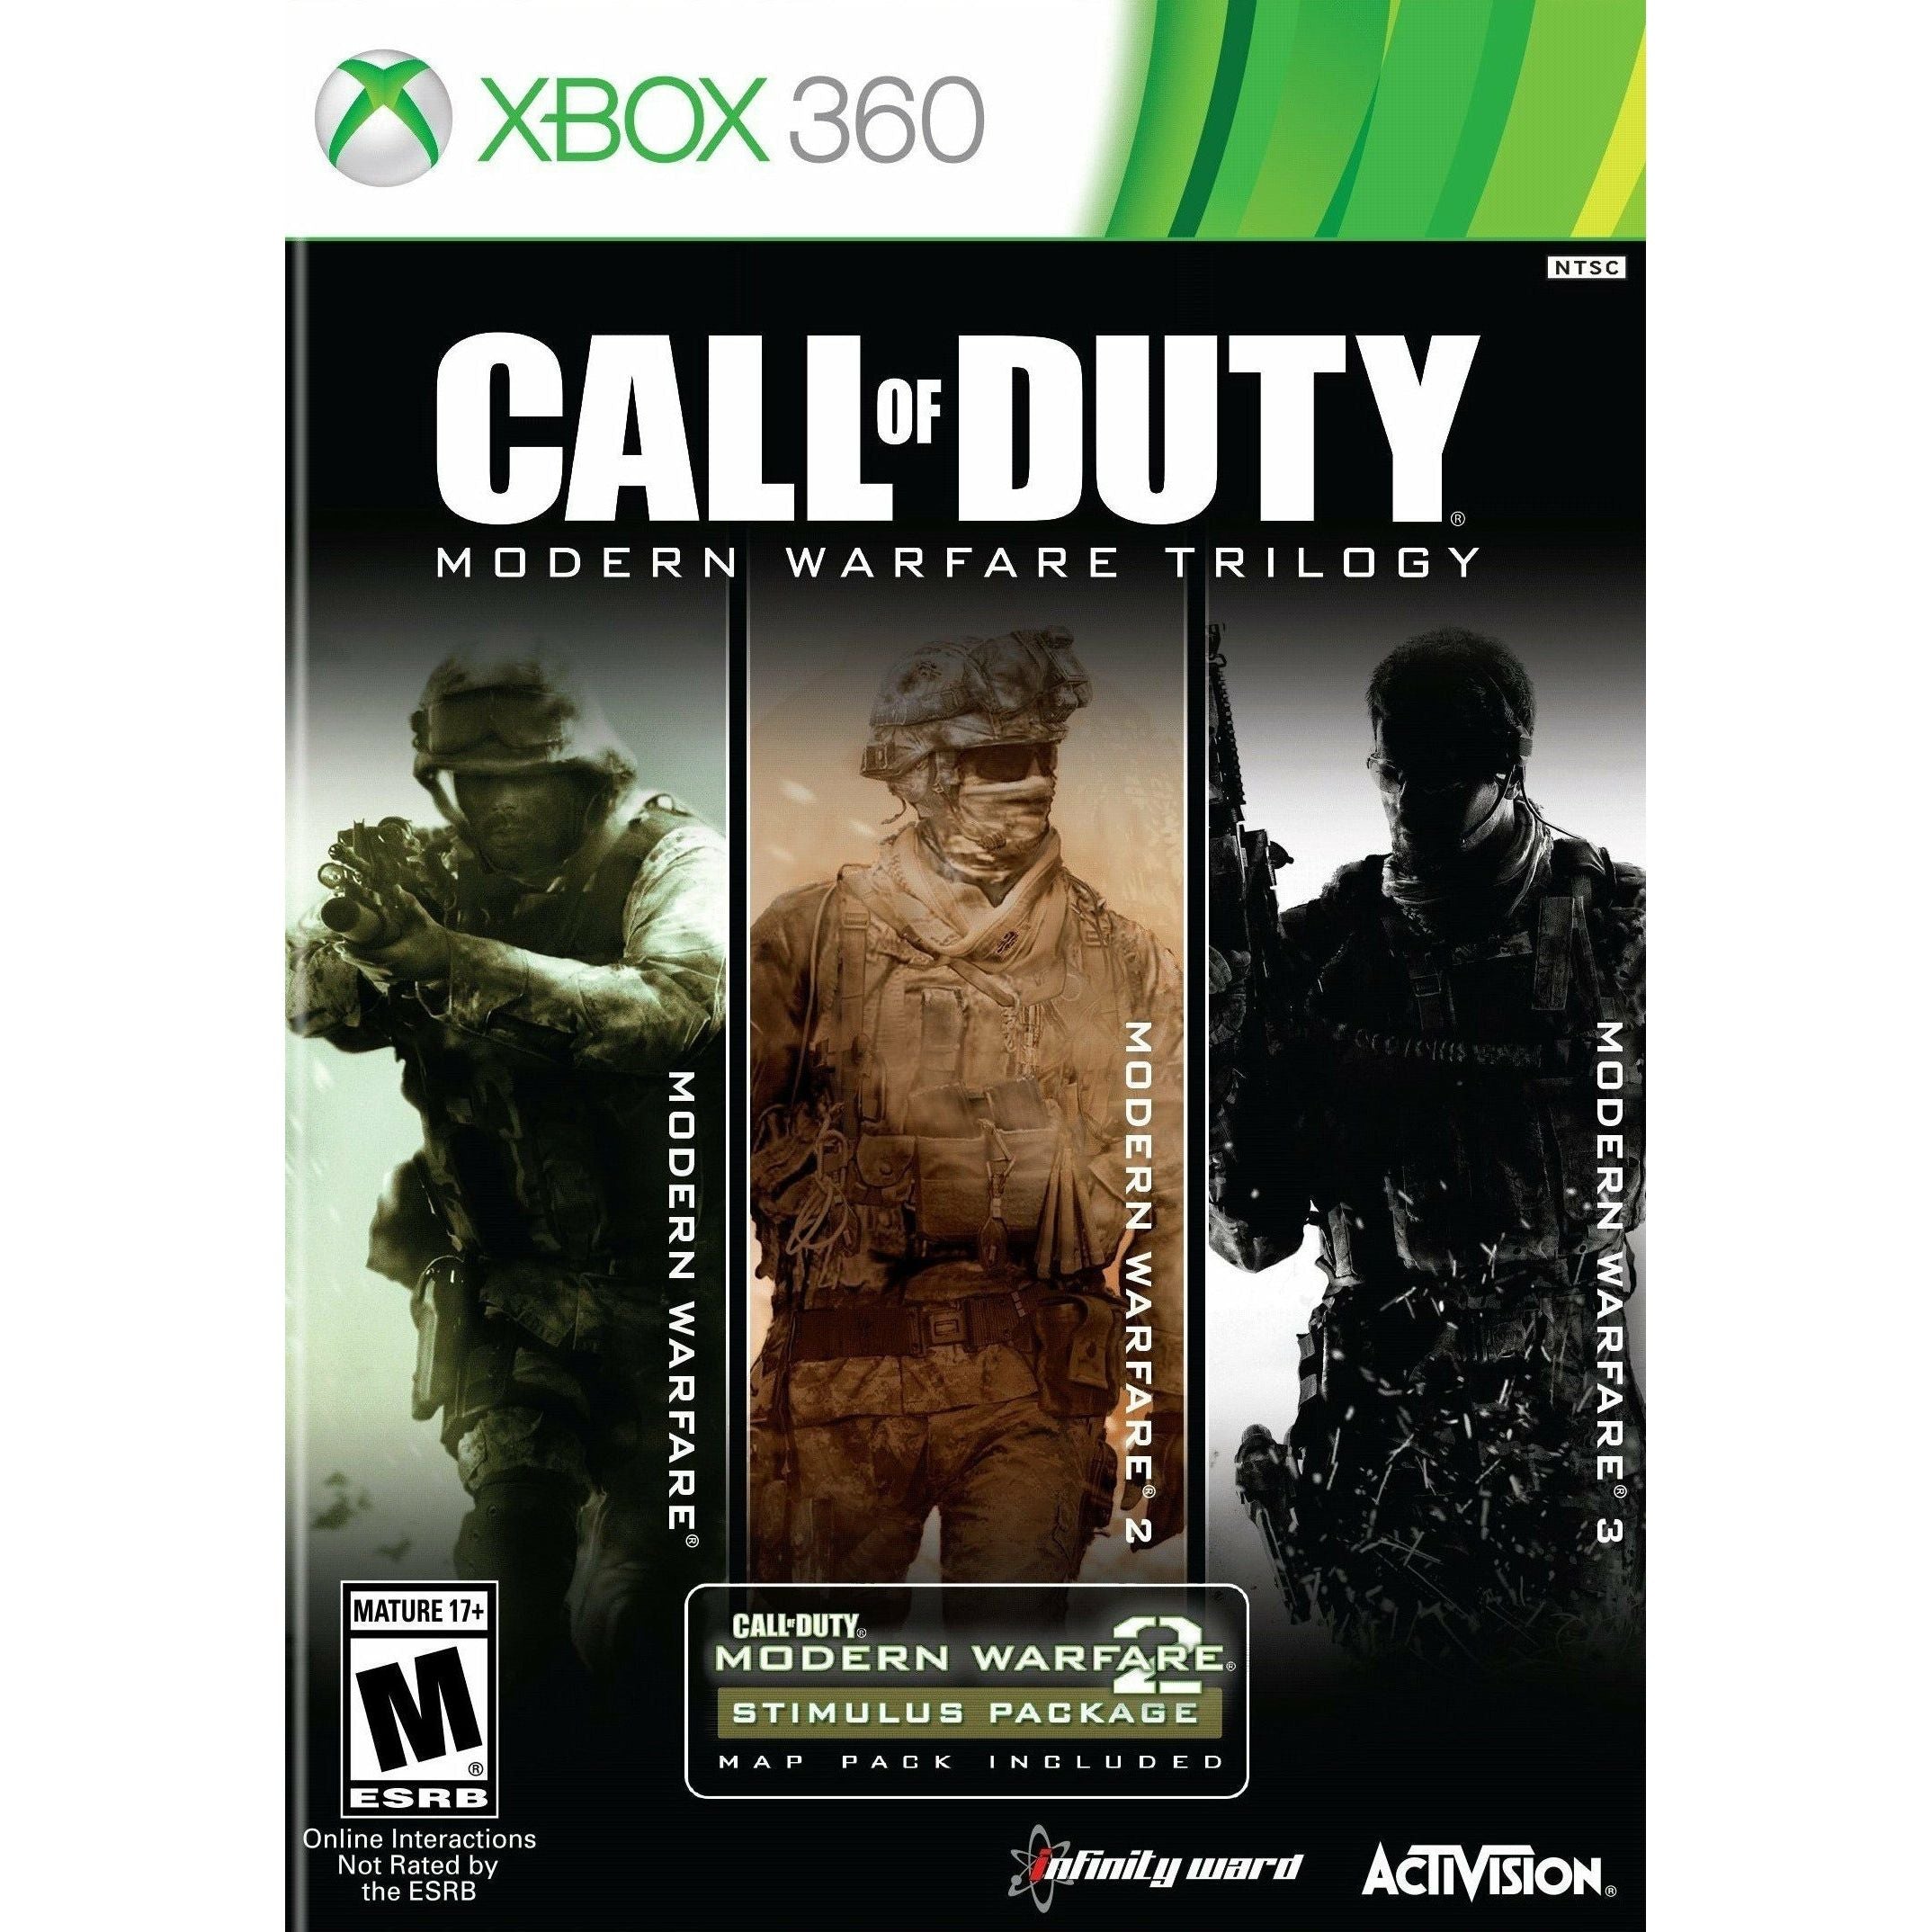 XBOX 360 - Trilogie Call of Duty Modern Warfare